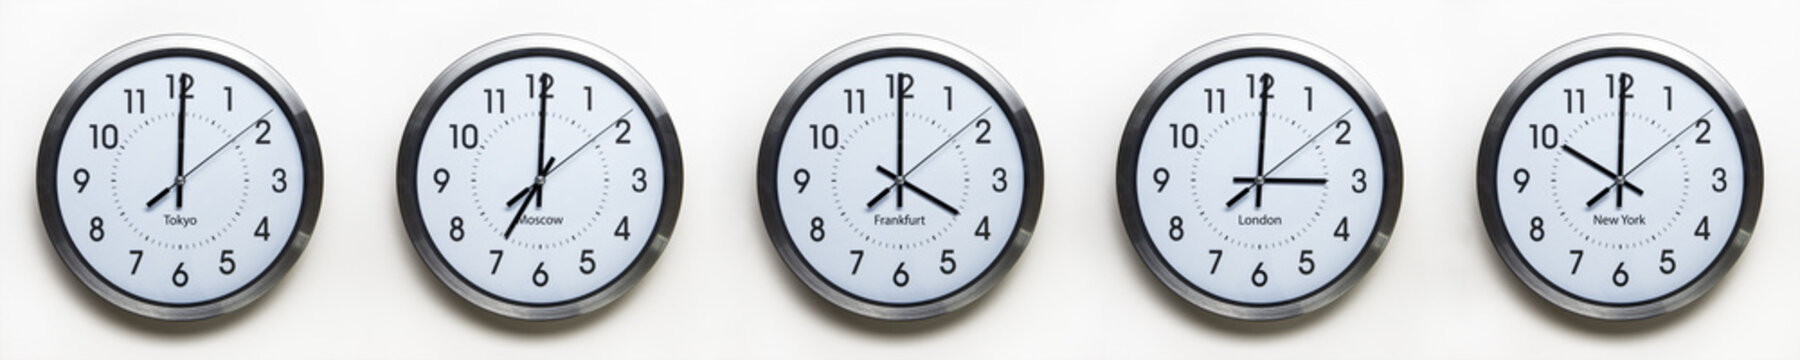 time zone clocks